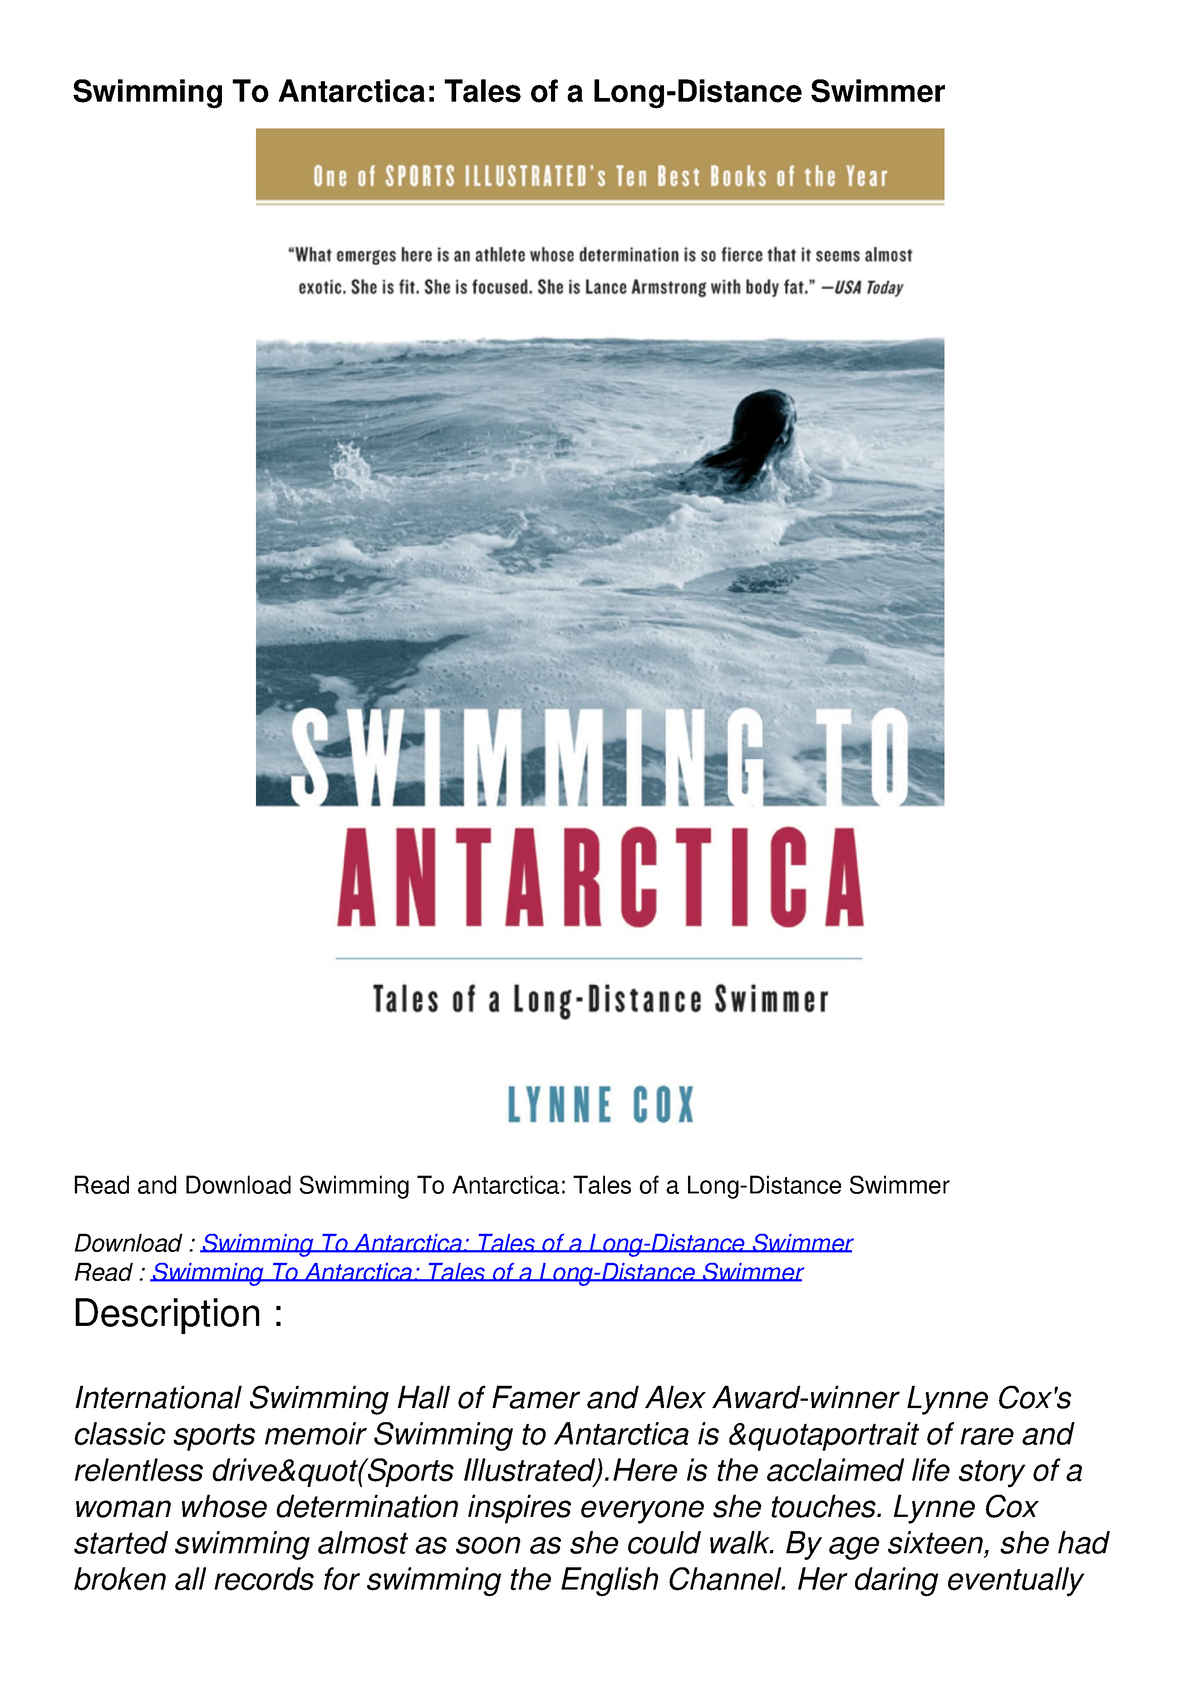 swimming to antarctica essay